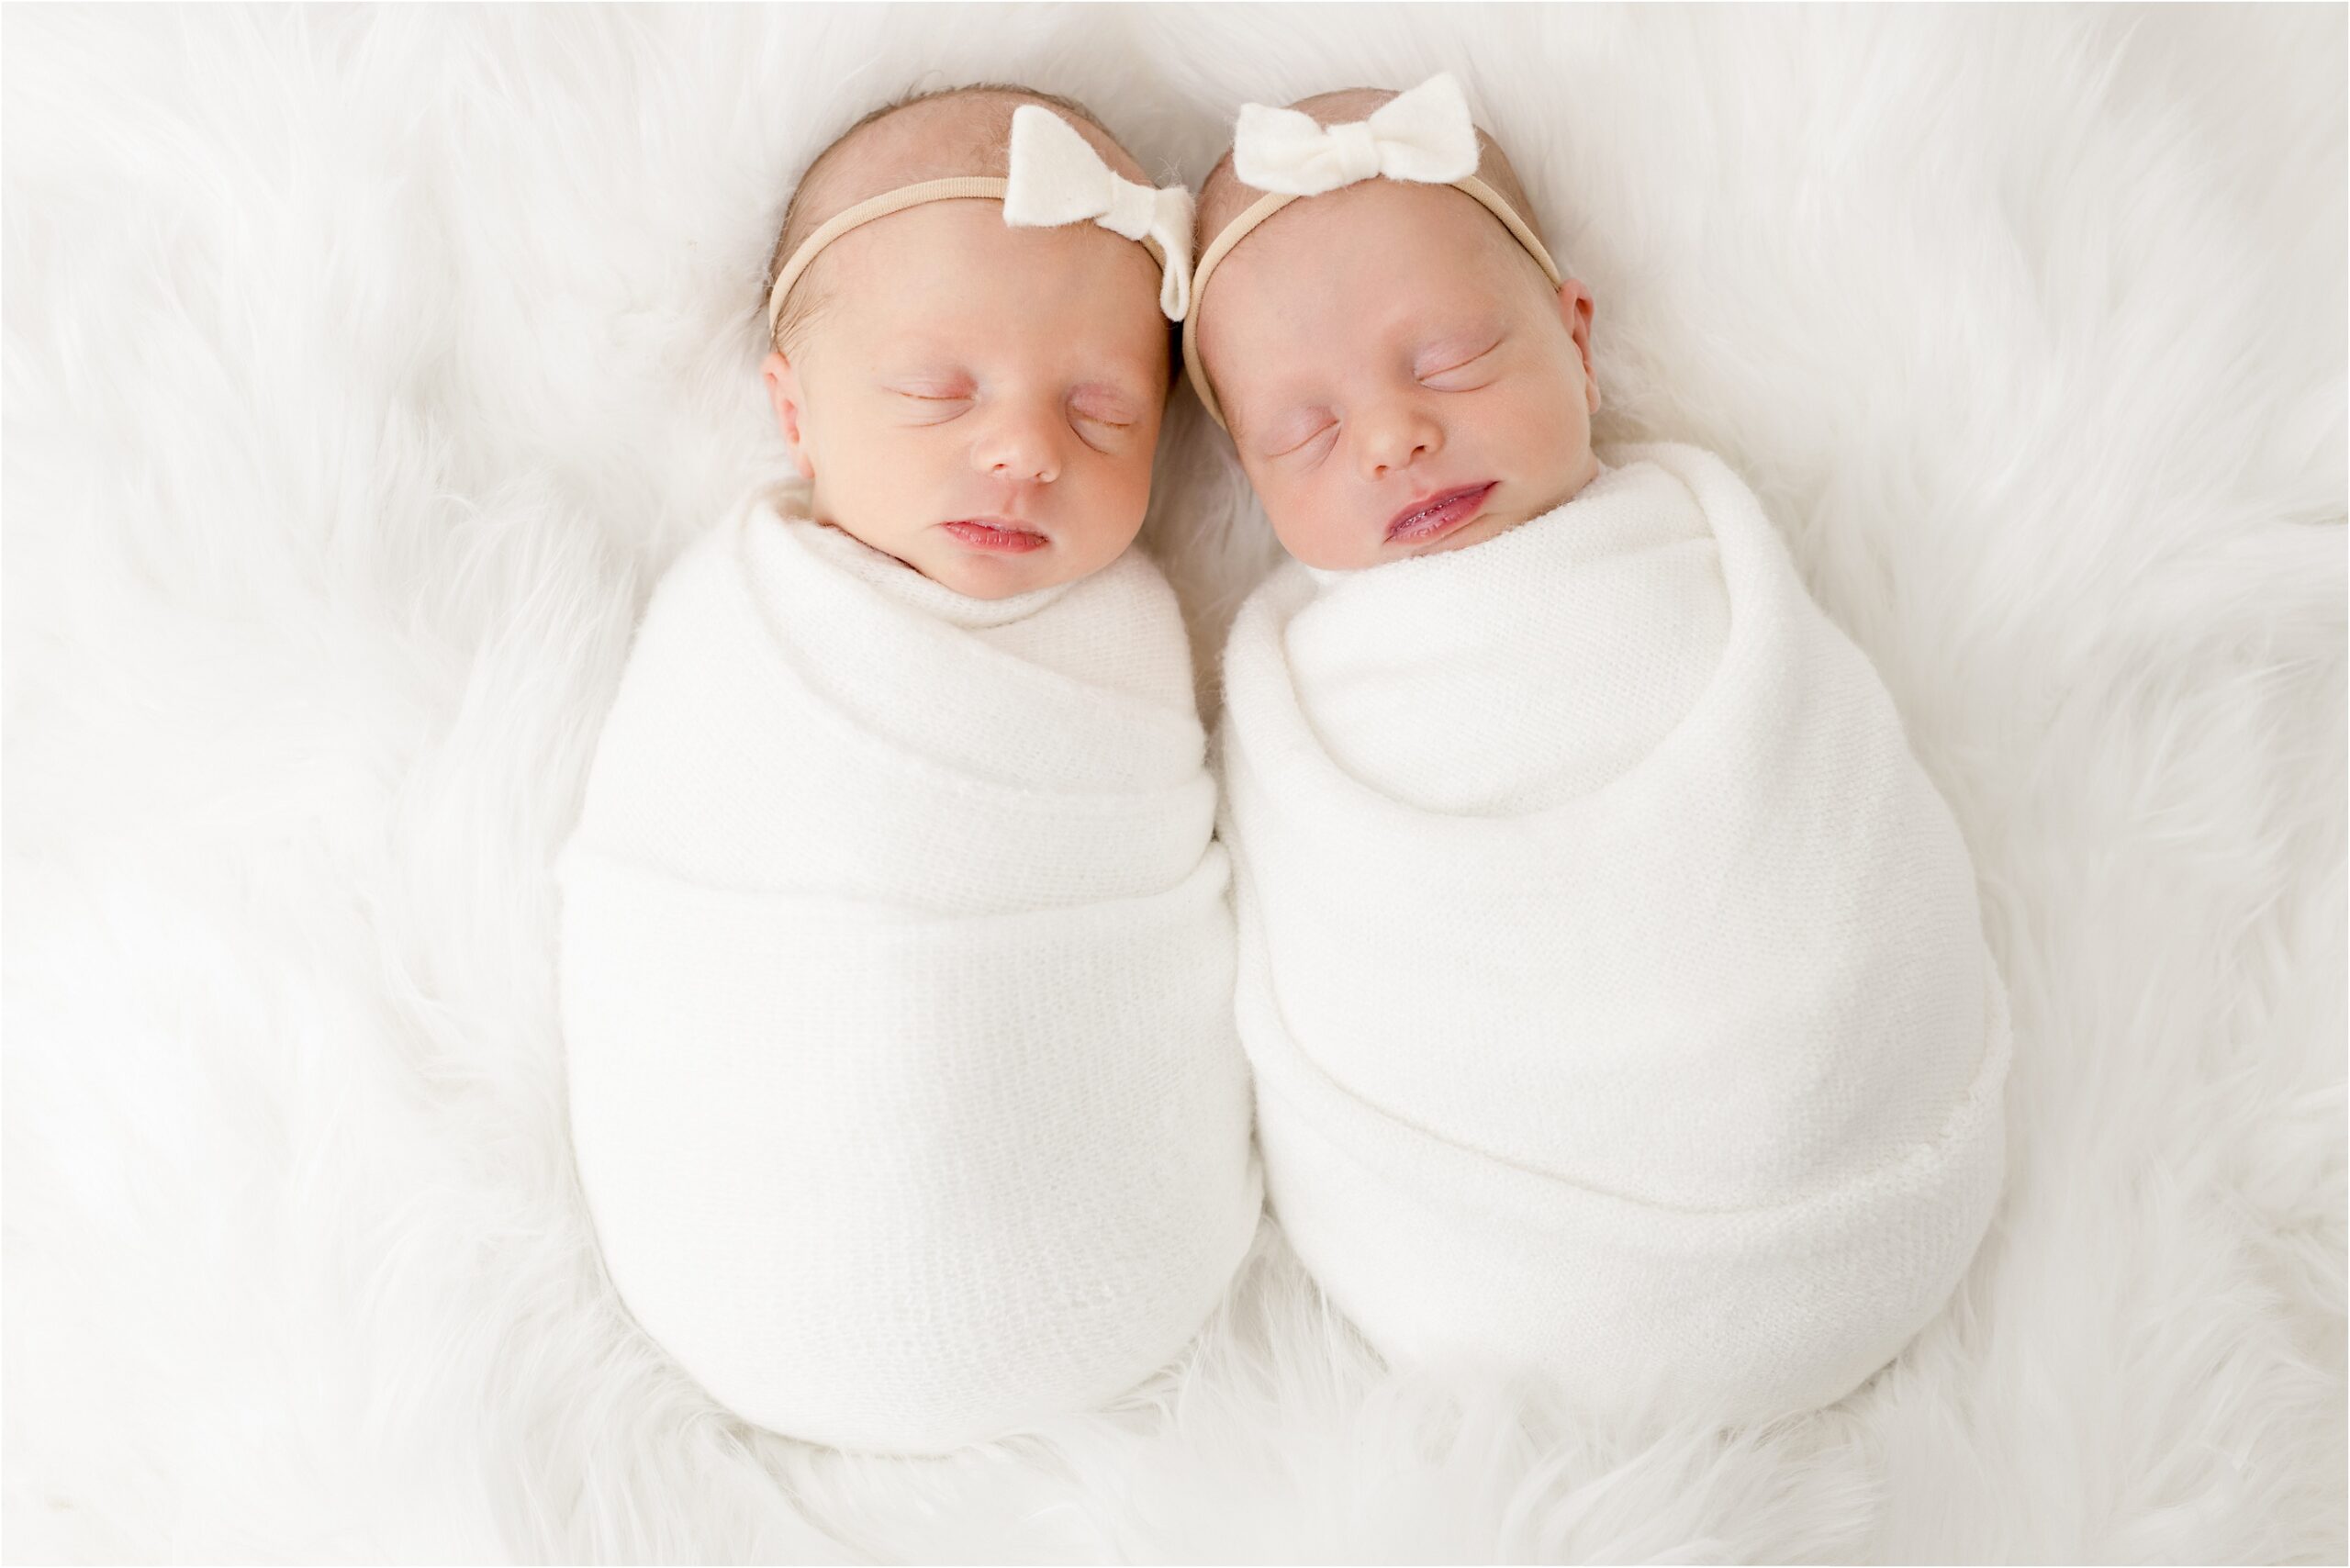 edmonton newborn photographer, newborn photos st albert, light and airy newborn photos, nc photography, yeg photographer, twin newborn photos, girl twin newborn photos